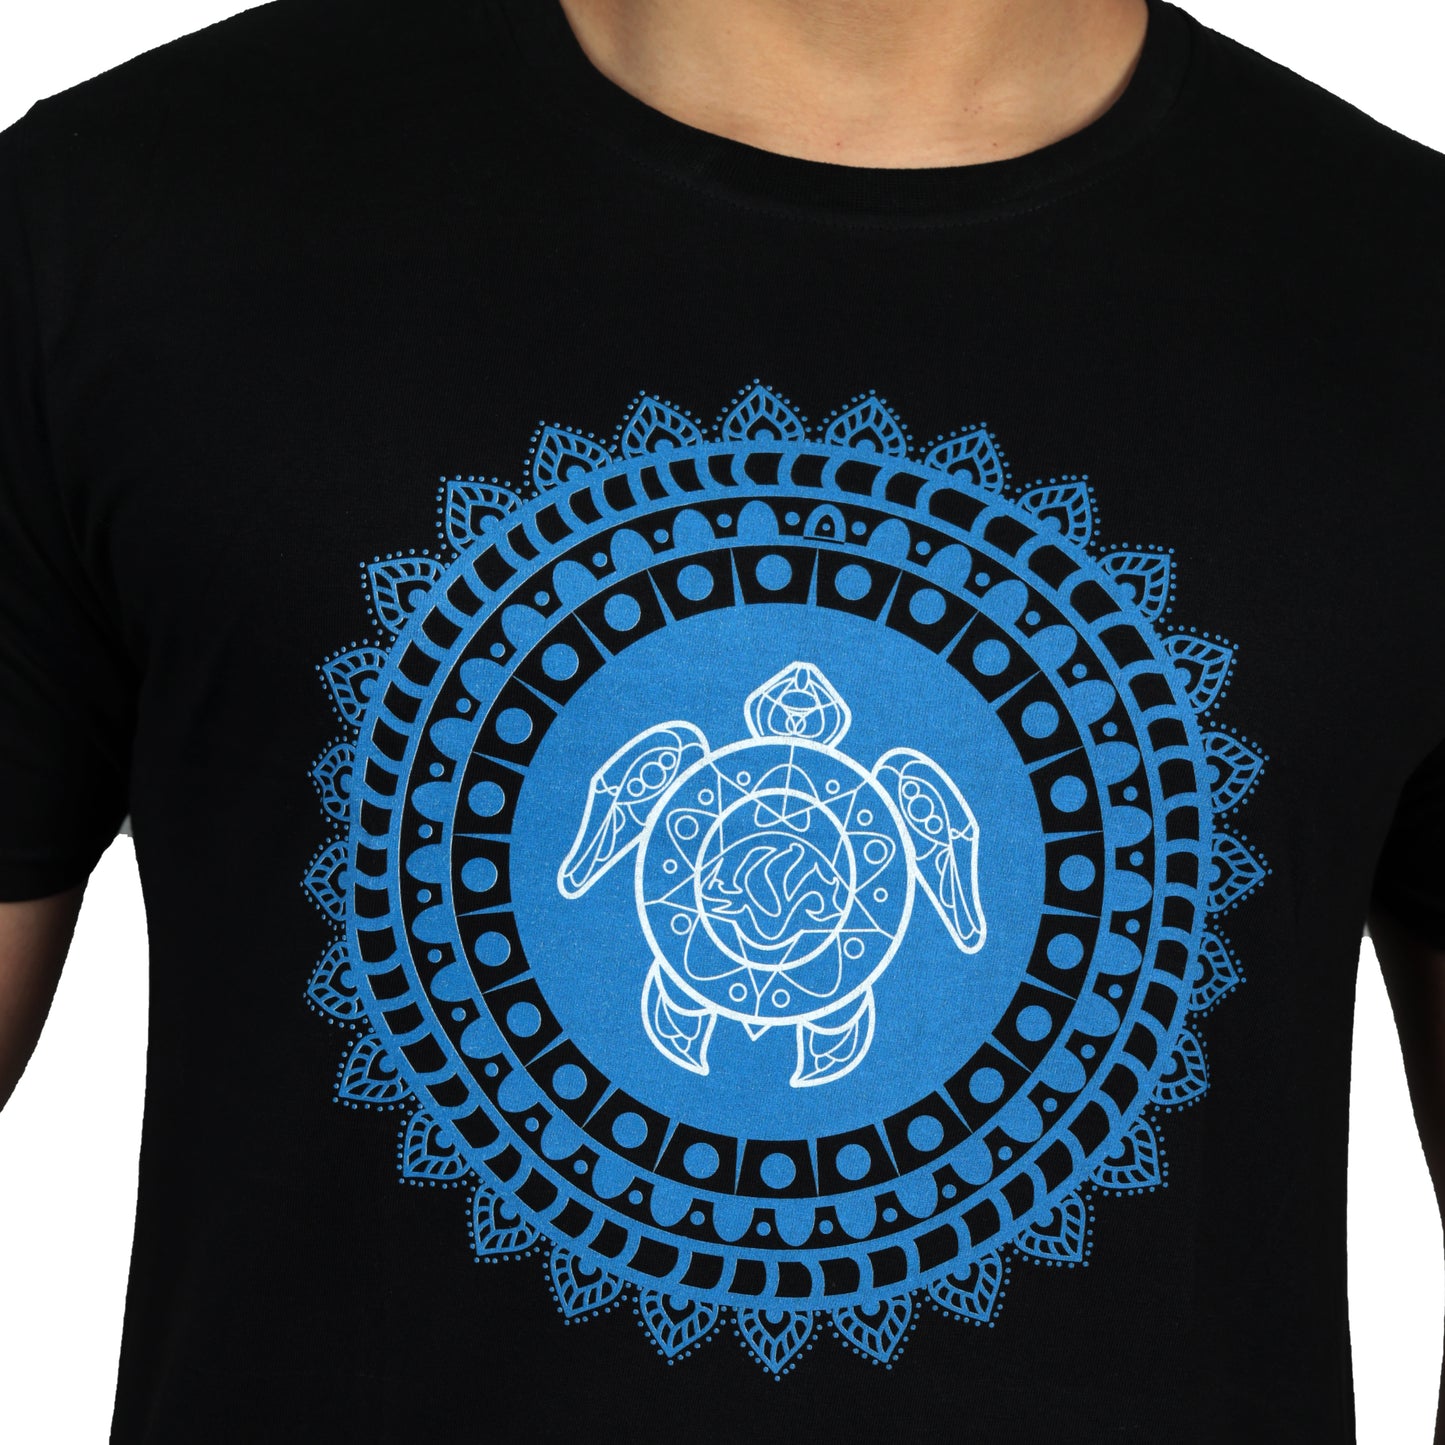 Nirvana Blue Turtle Printed T-shirt In Black Color For Men